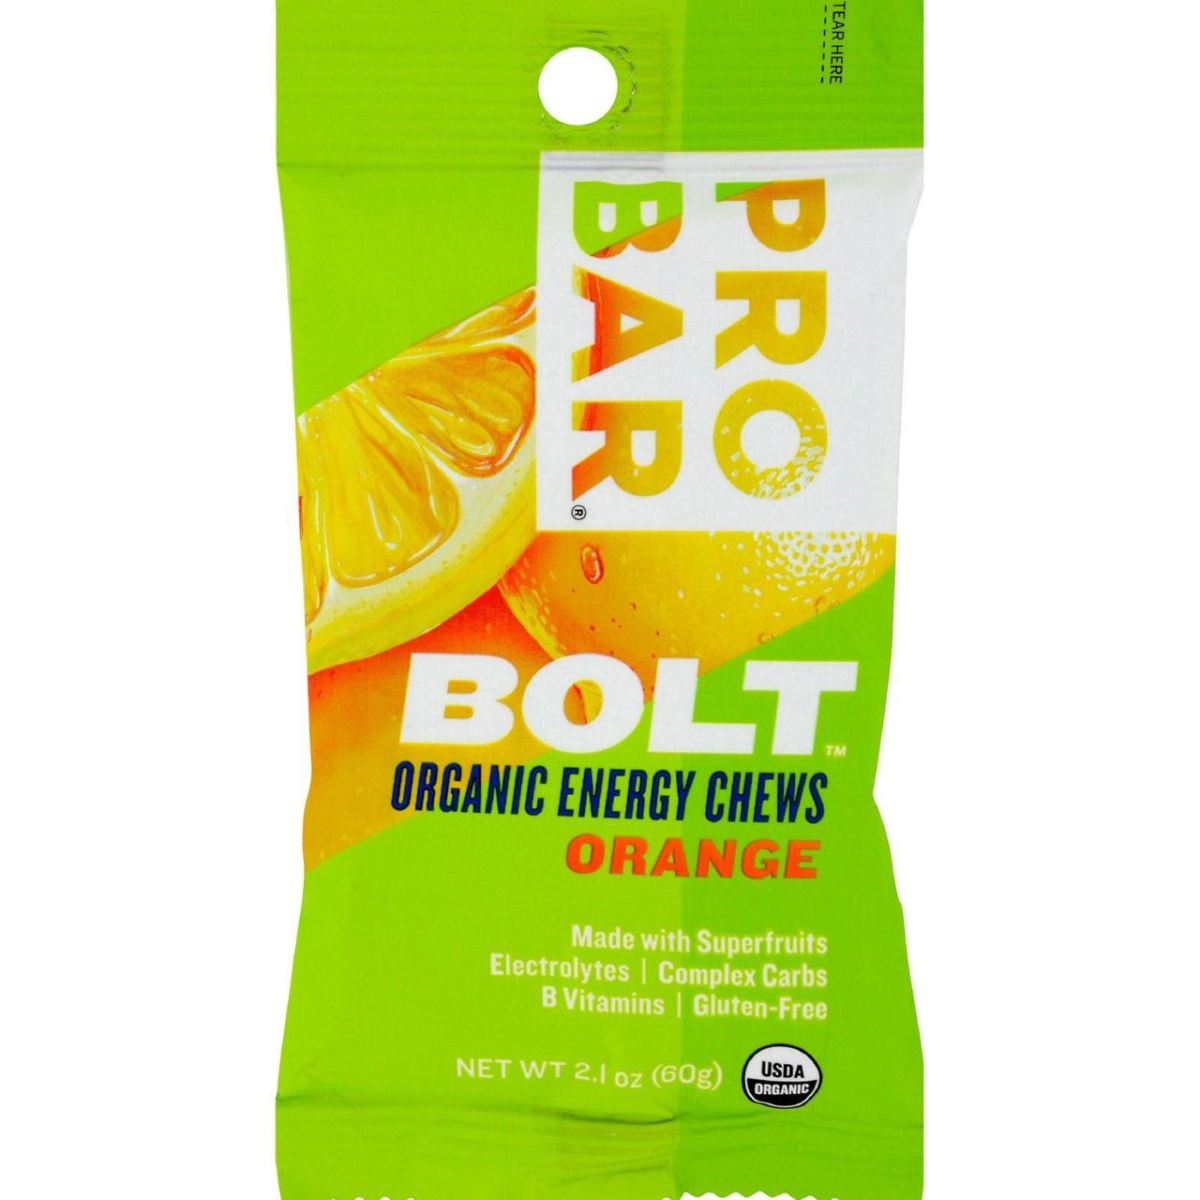 Hg1232198 2.1 Oz Bolt Energy Chews - Organic Orange, Case Of 12